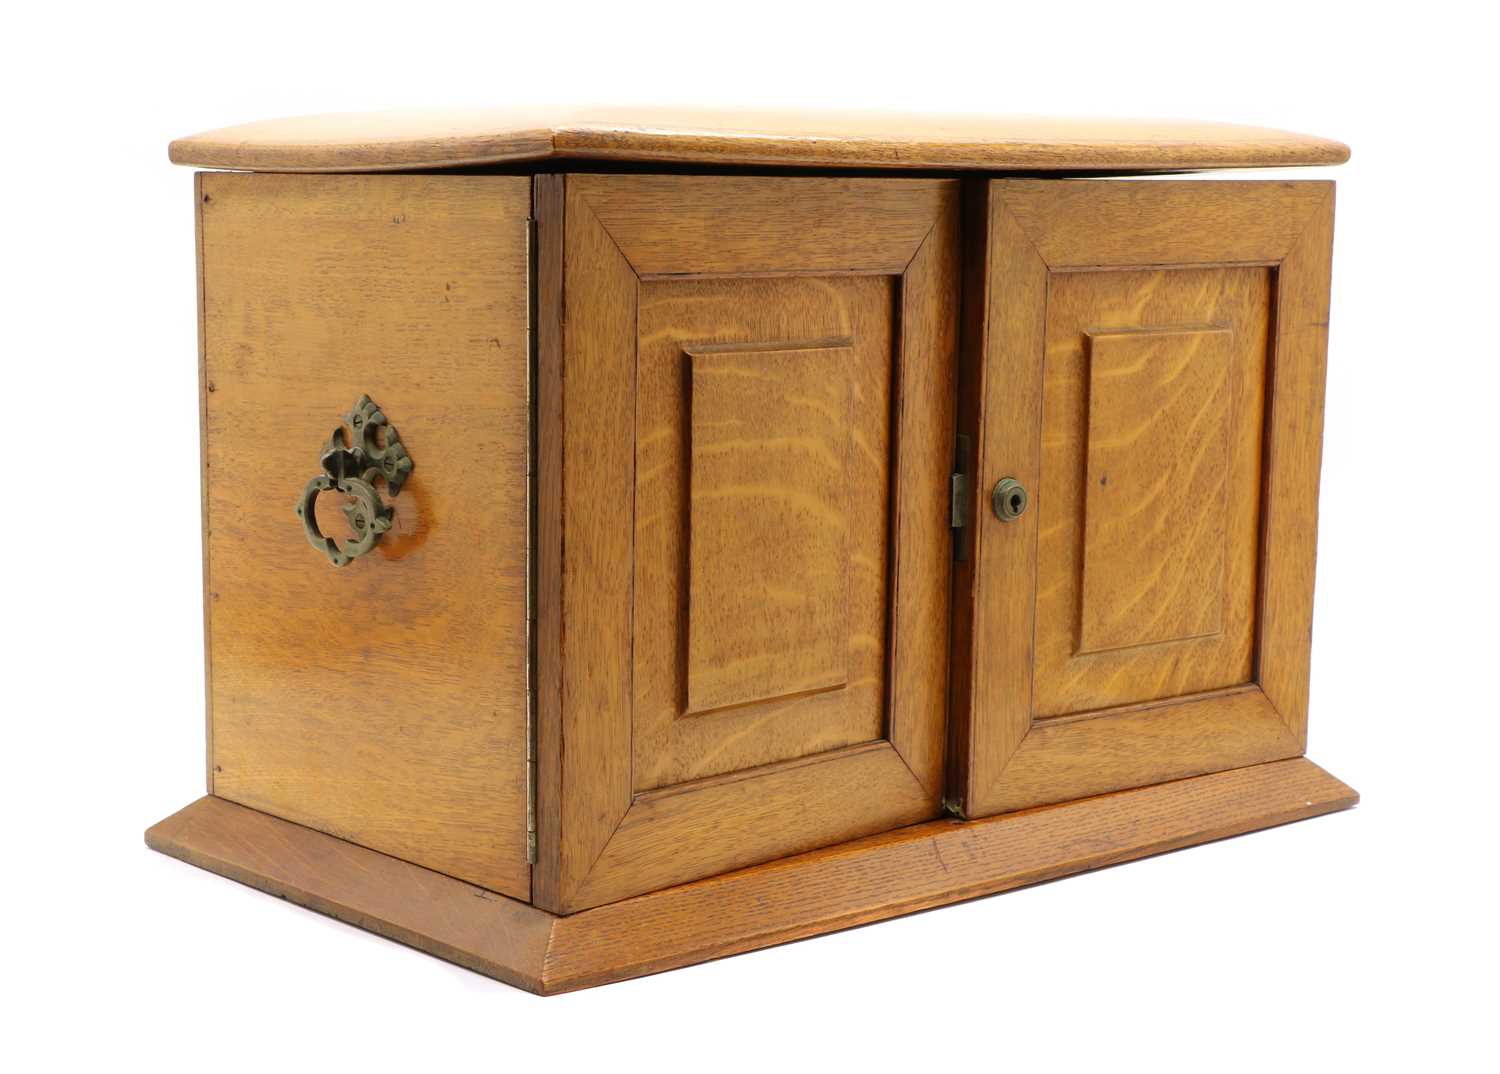 Lot 260 - An Edwardian honey oak stationery cabinet